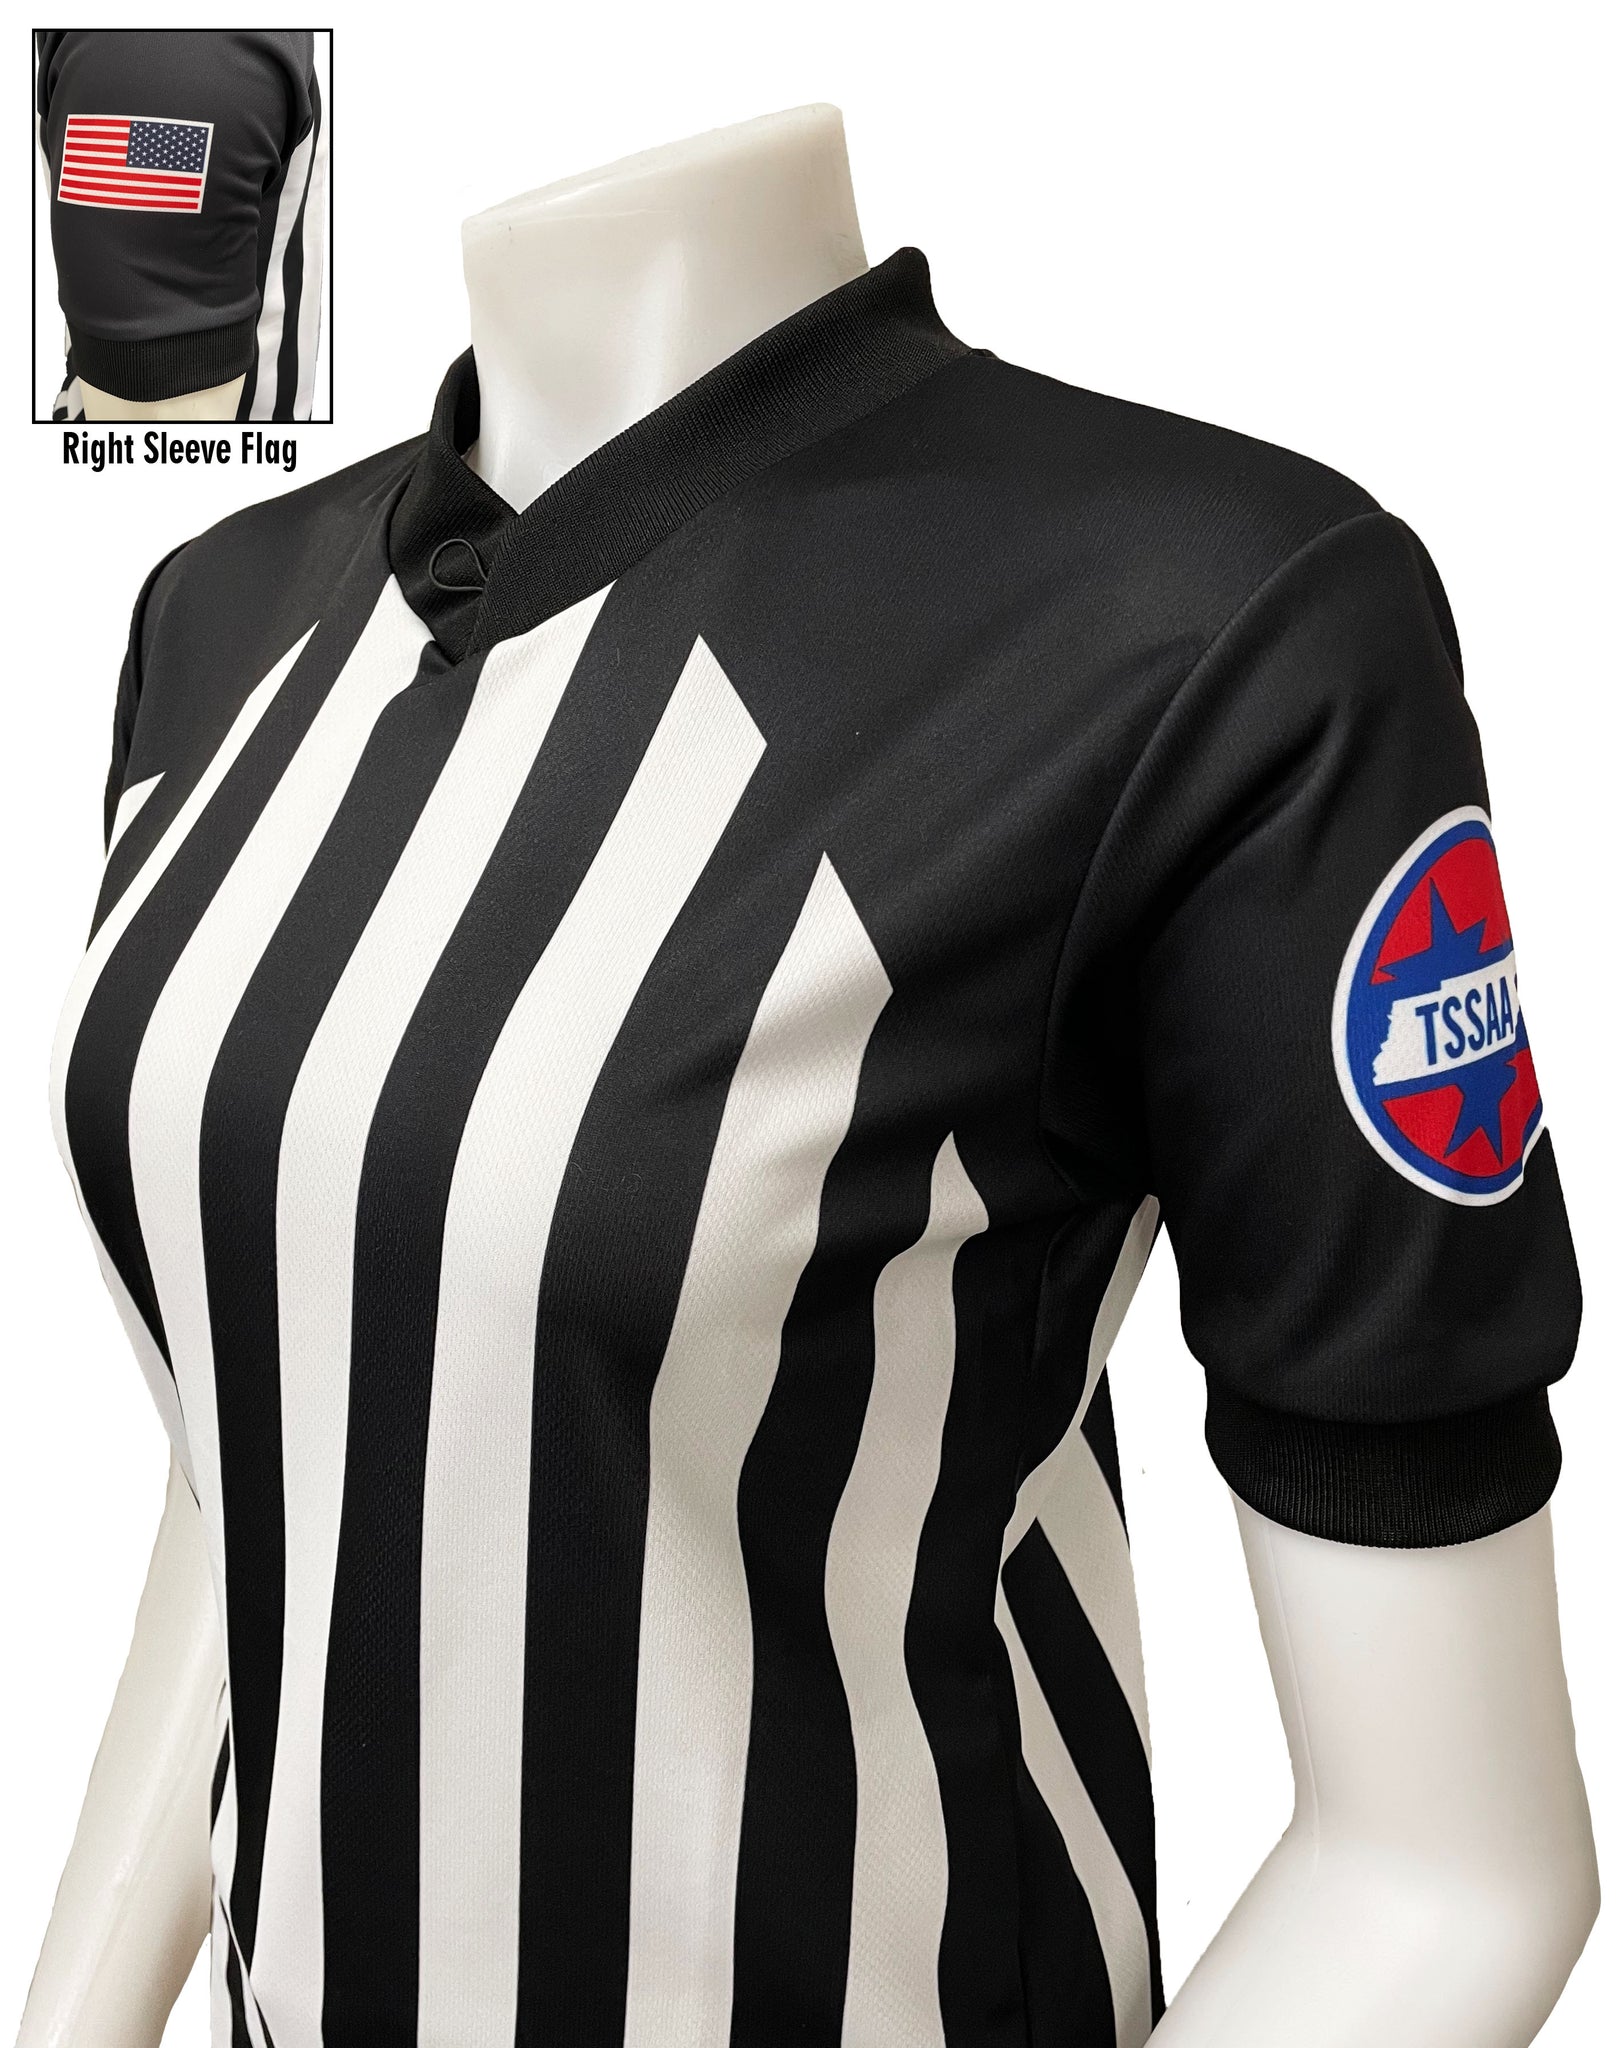 USA226TN - Smitty *NEW* "Made in USA" TSSAA Women's Basketball Shirt